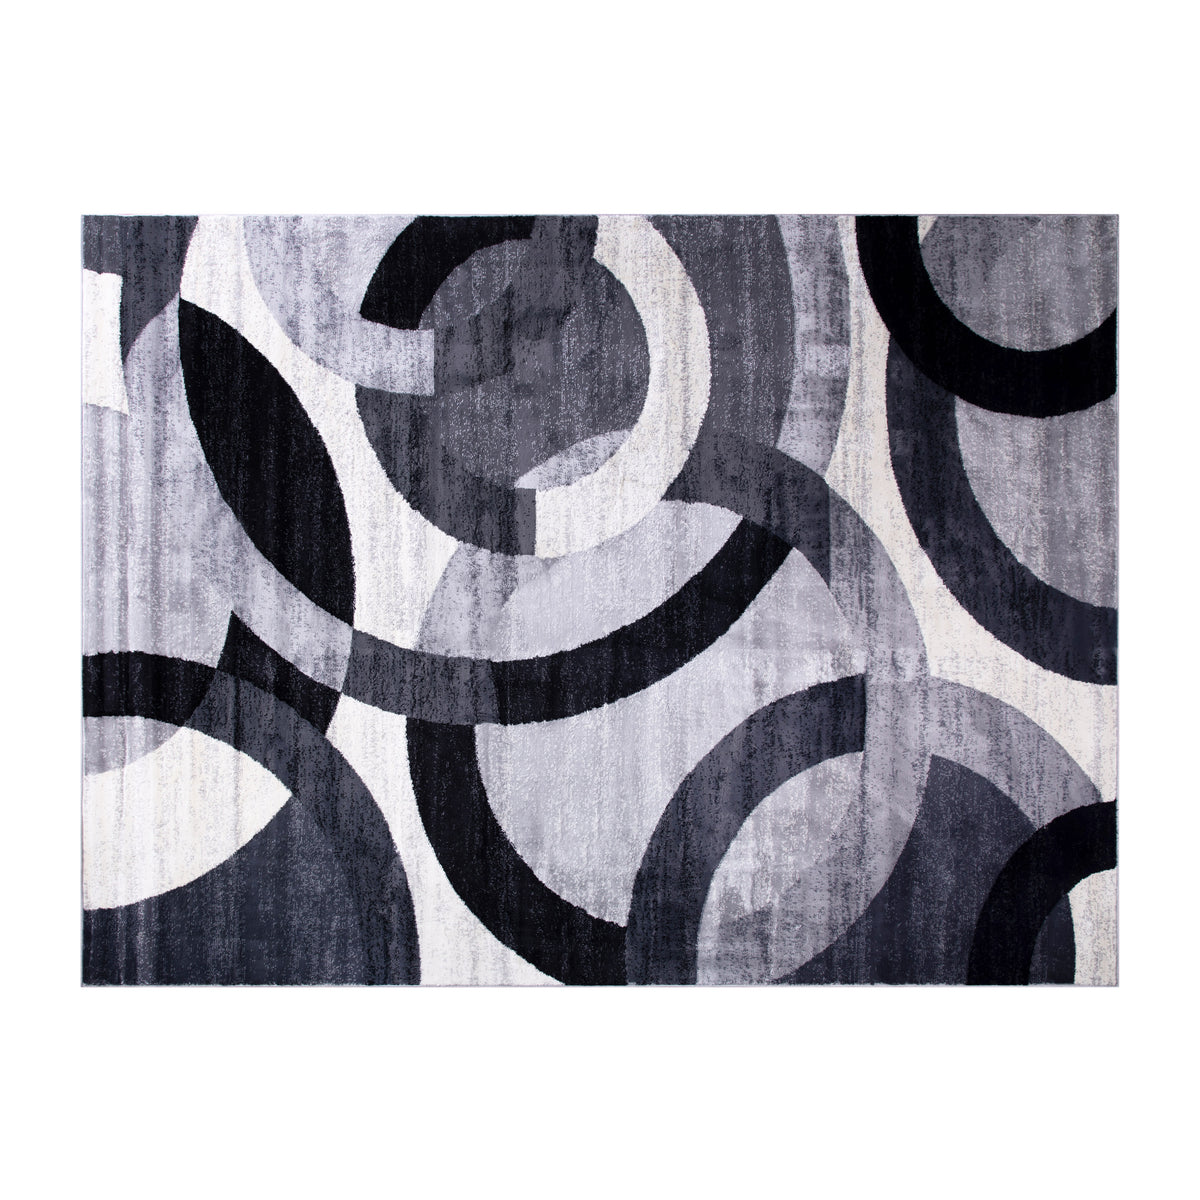 Gray,6' x 9' |#| Modern Geometric Design Area Rug in Black, Gray, and White - 6' x 9'